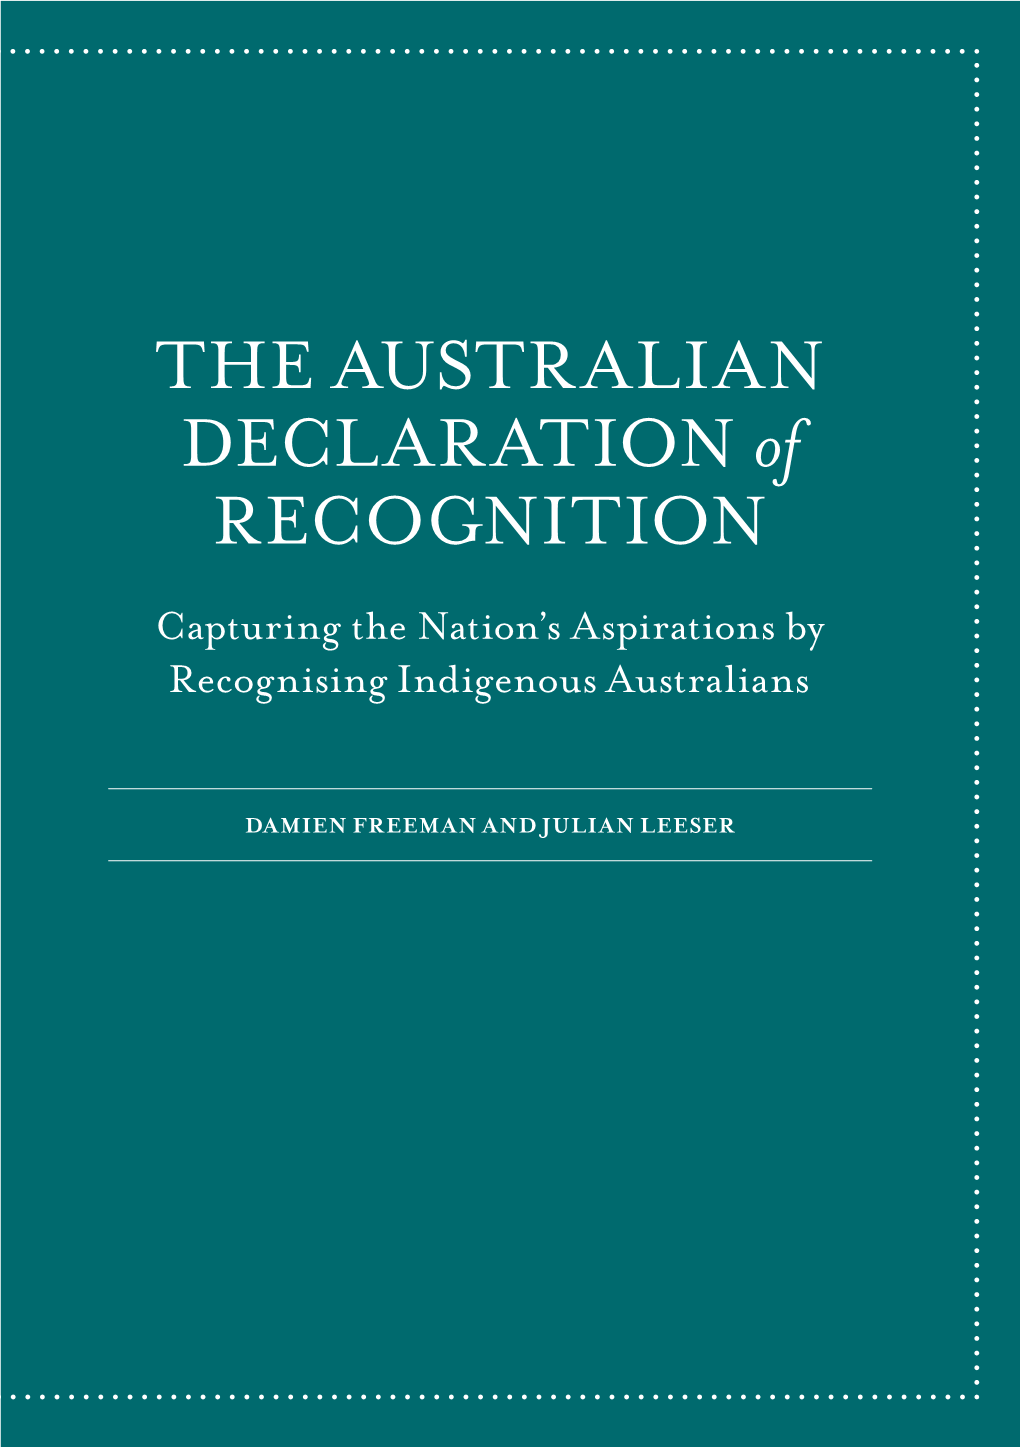 THE AUSTRALIAN DECLARATION of RECOGNITION